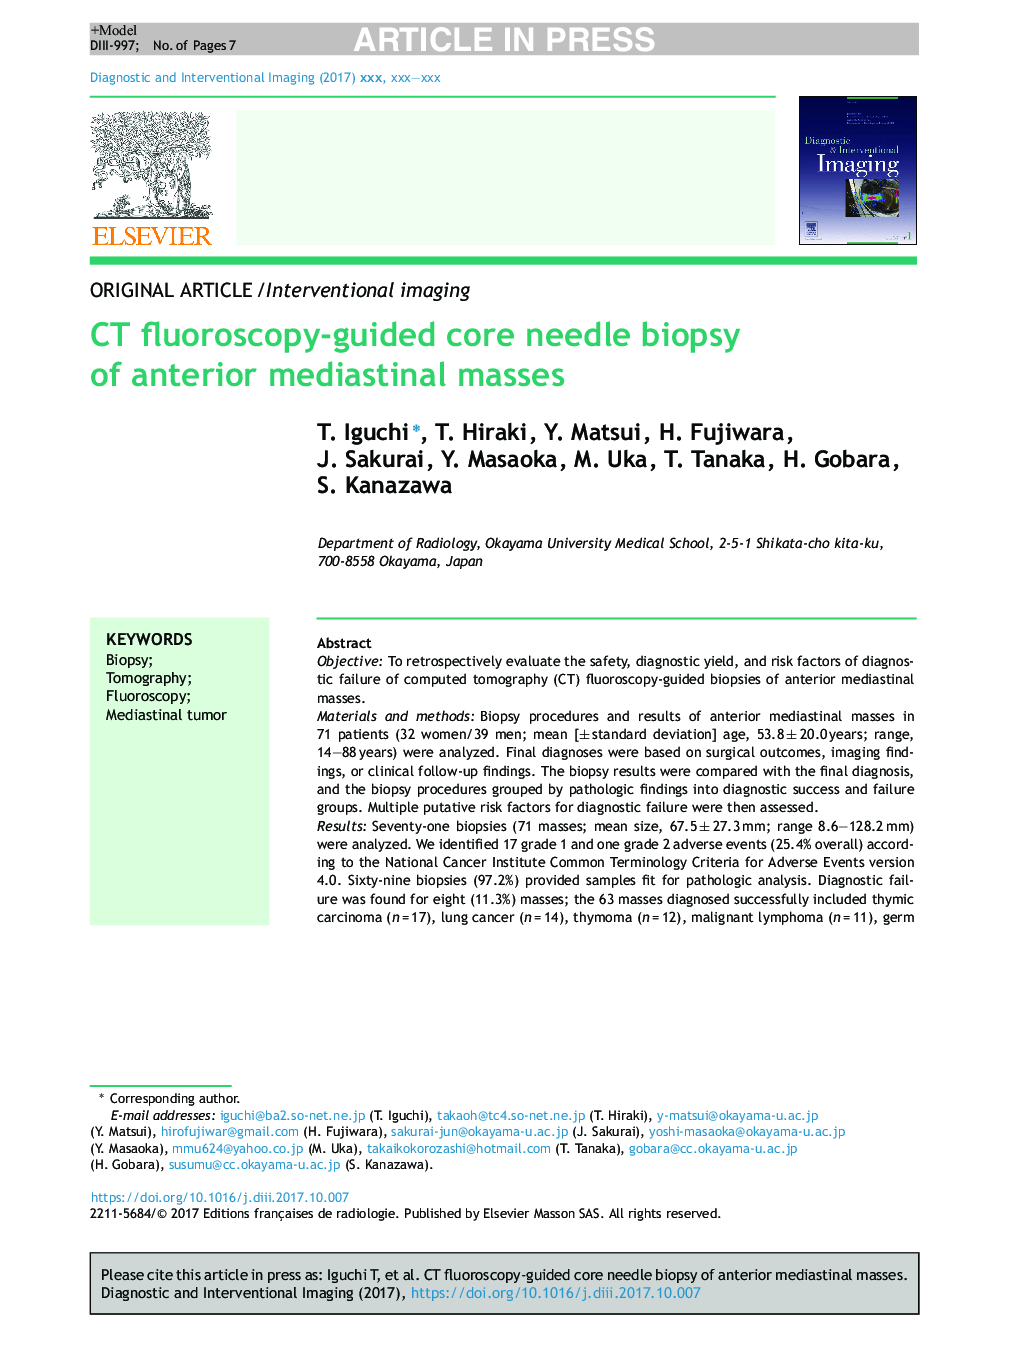 CT fluoroscopy-guided core needle biopsy of anterior mediastinal masses